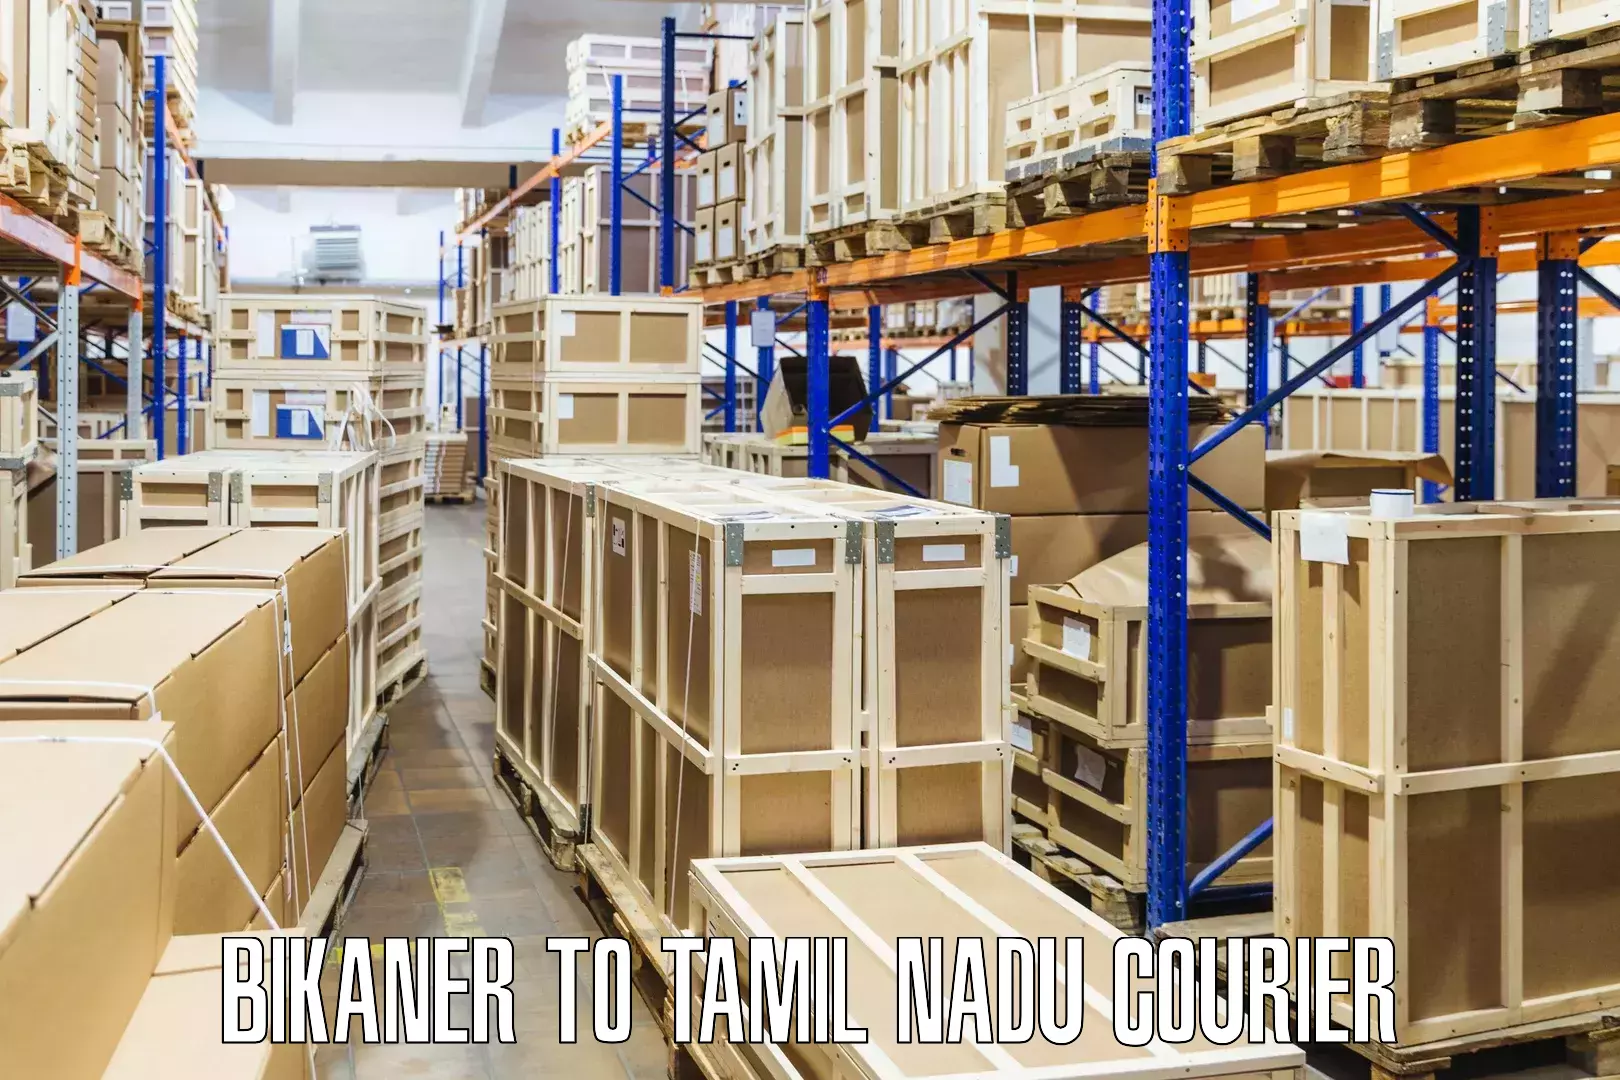 Supply chain efficiency Bikaner to Tamil Nadu